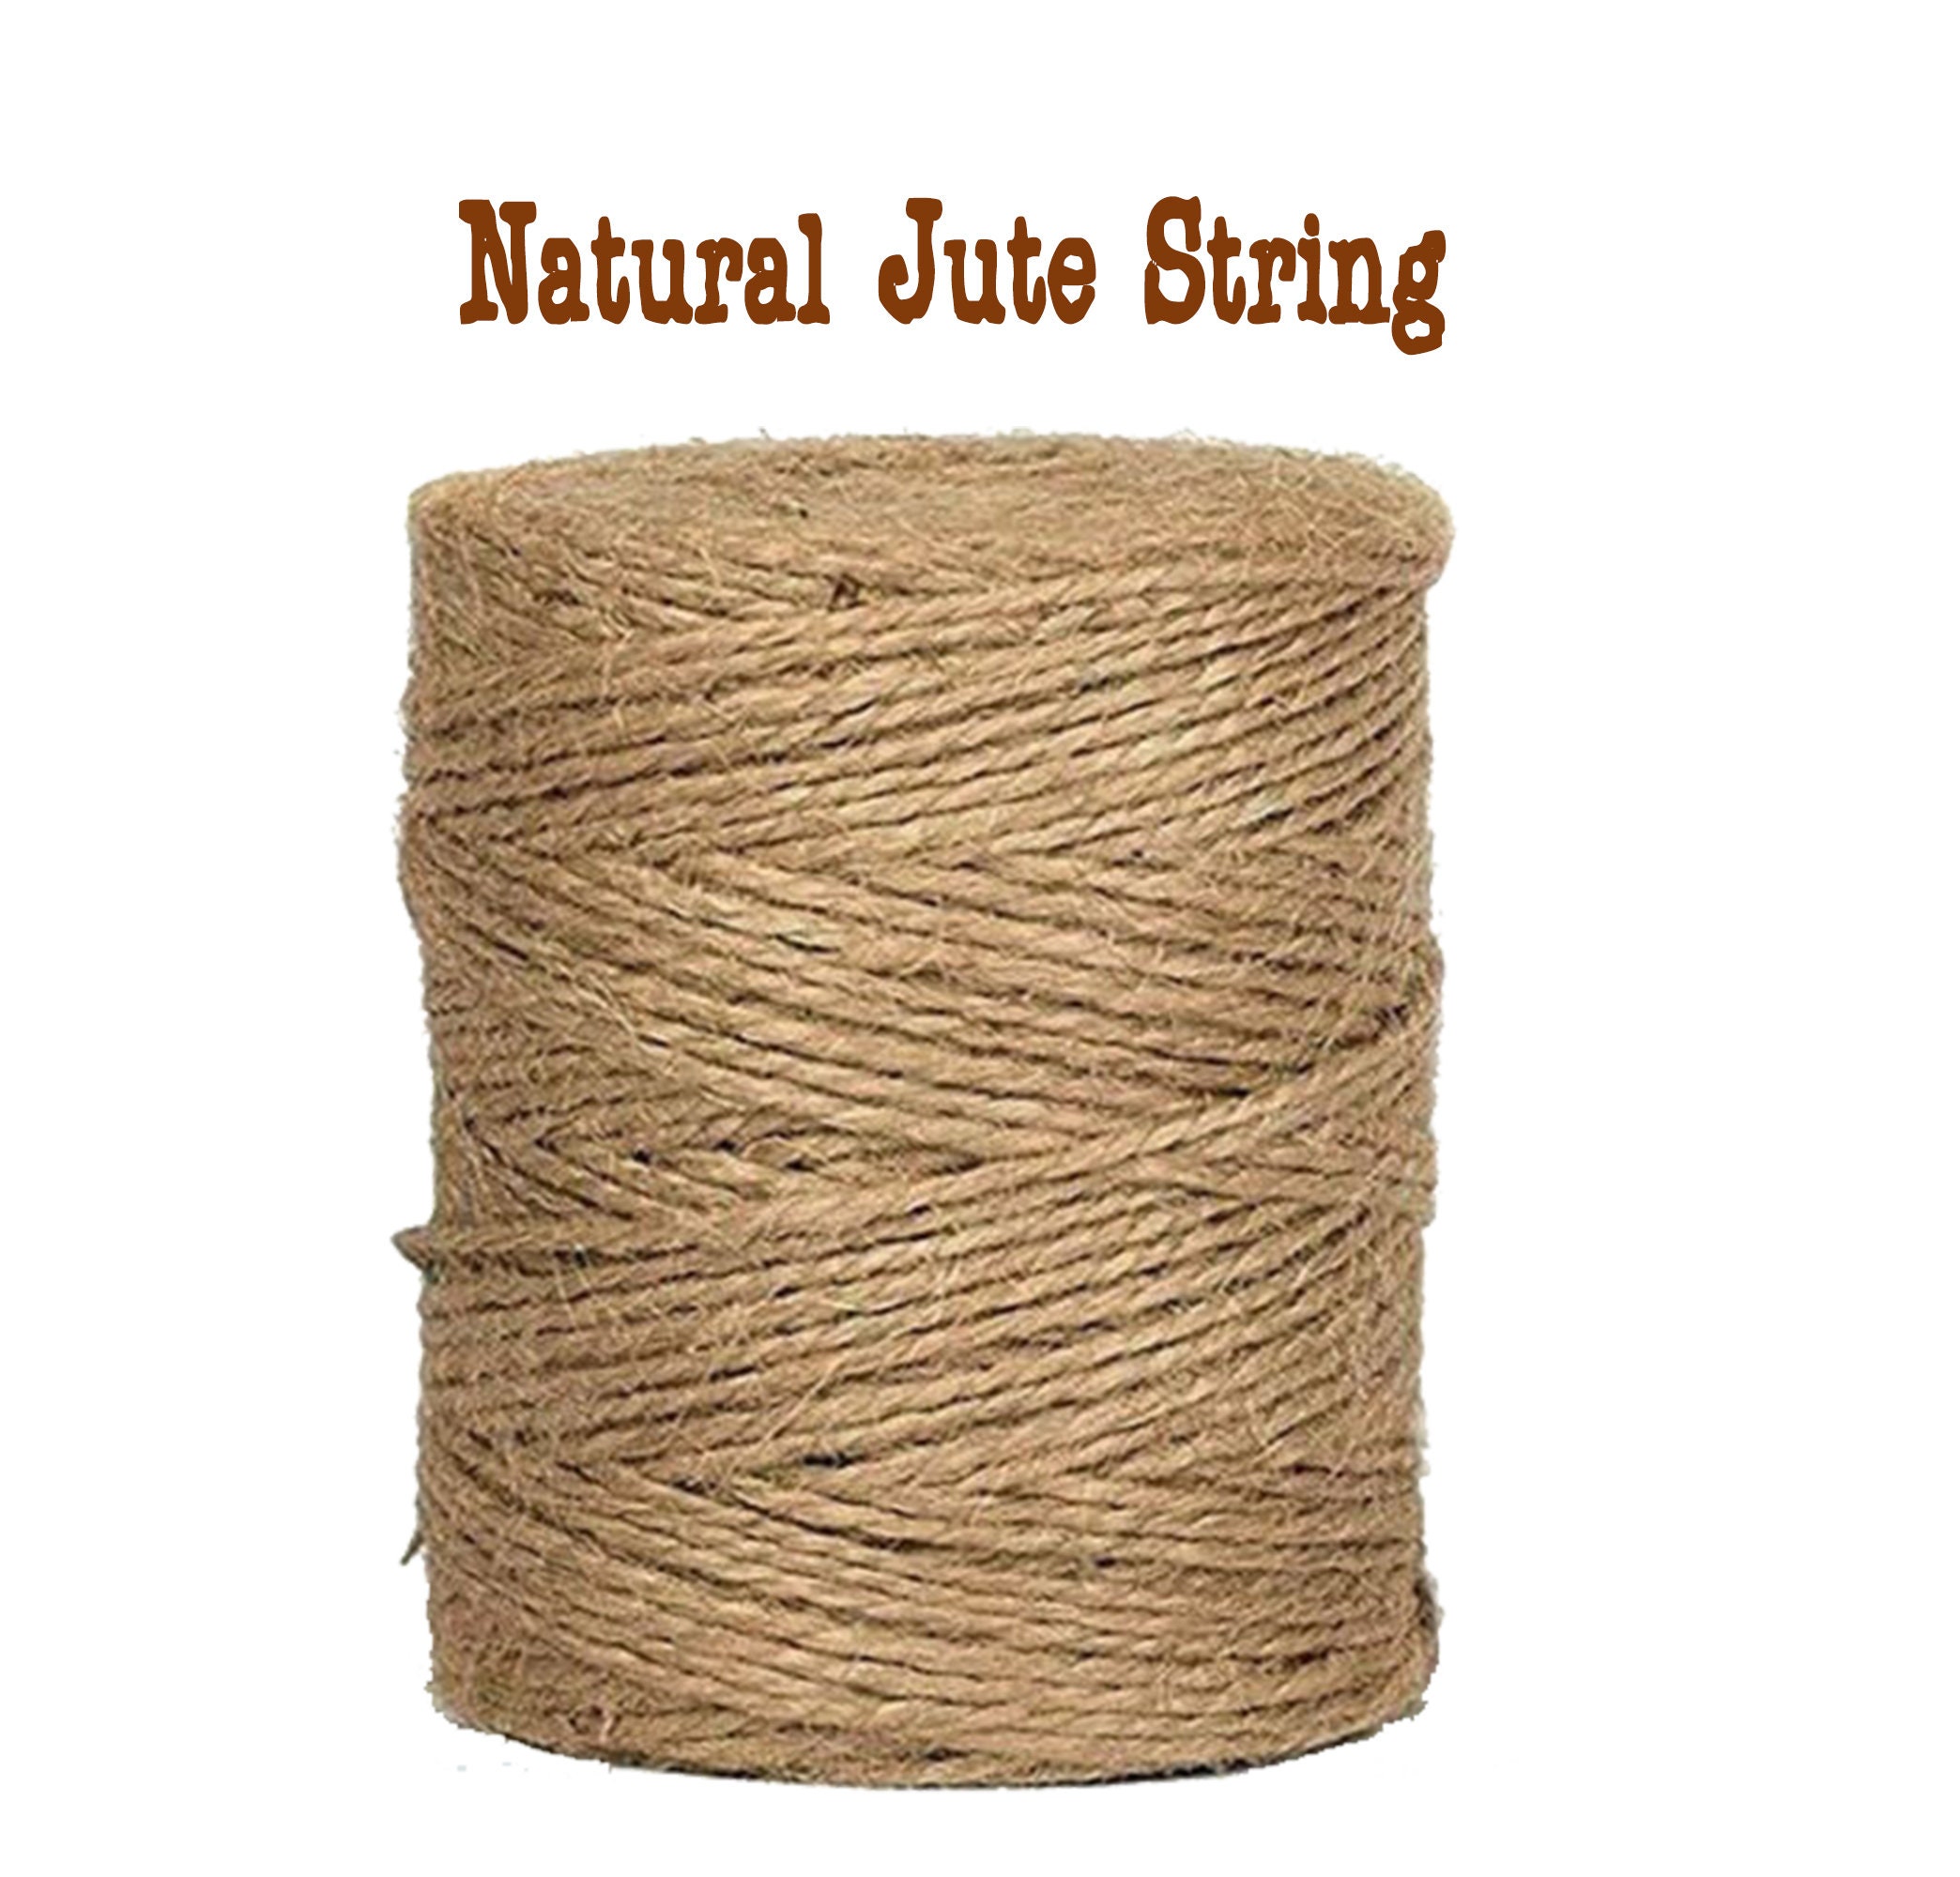 8mm Jute Rope 30ft, Natural Jute Cord, Plain Twine, Craft Burlap Cording,  Hemp Twisted Cord, Jute Macrame Cord / 30ft 10yd 9m 